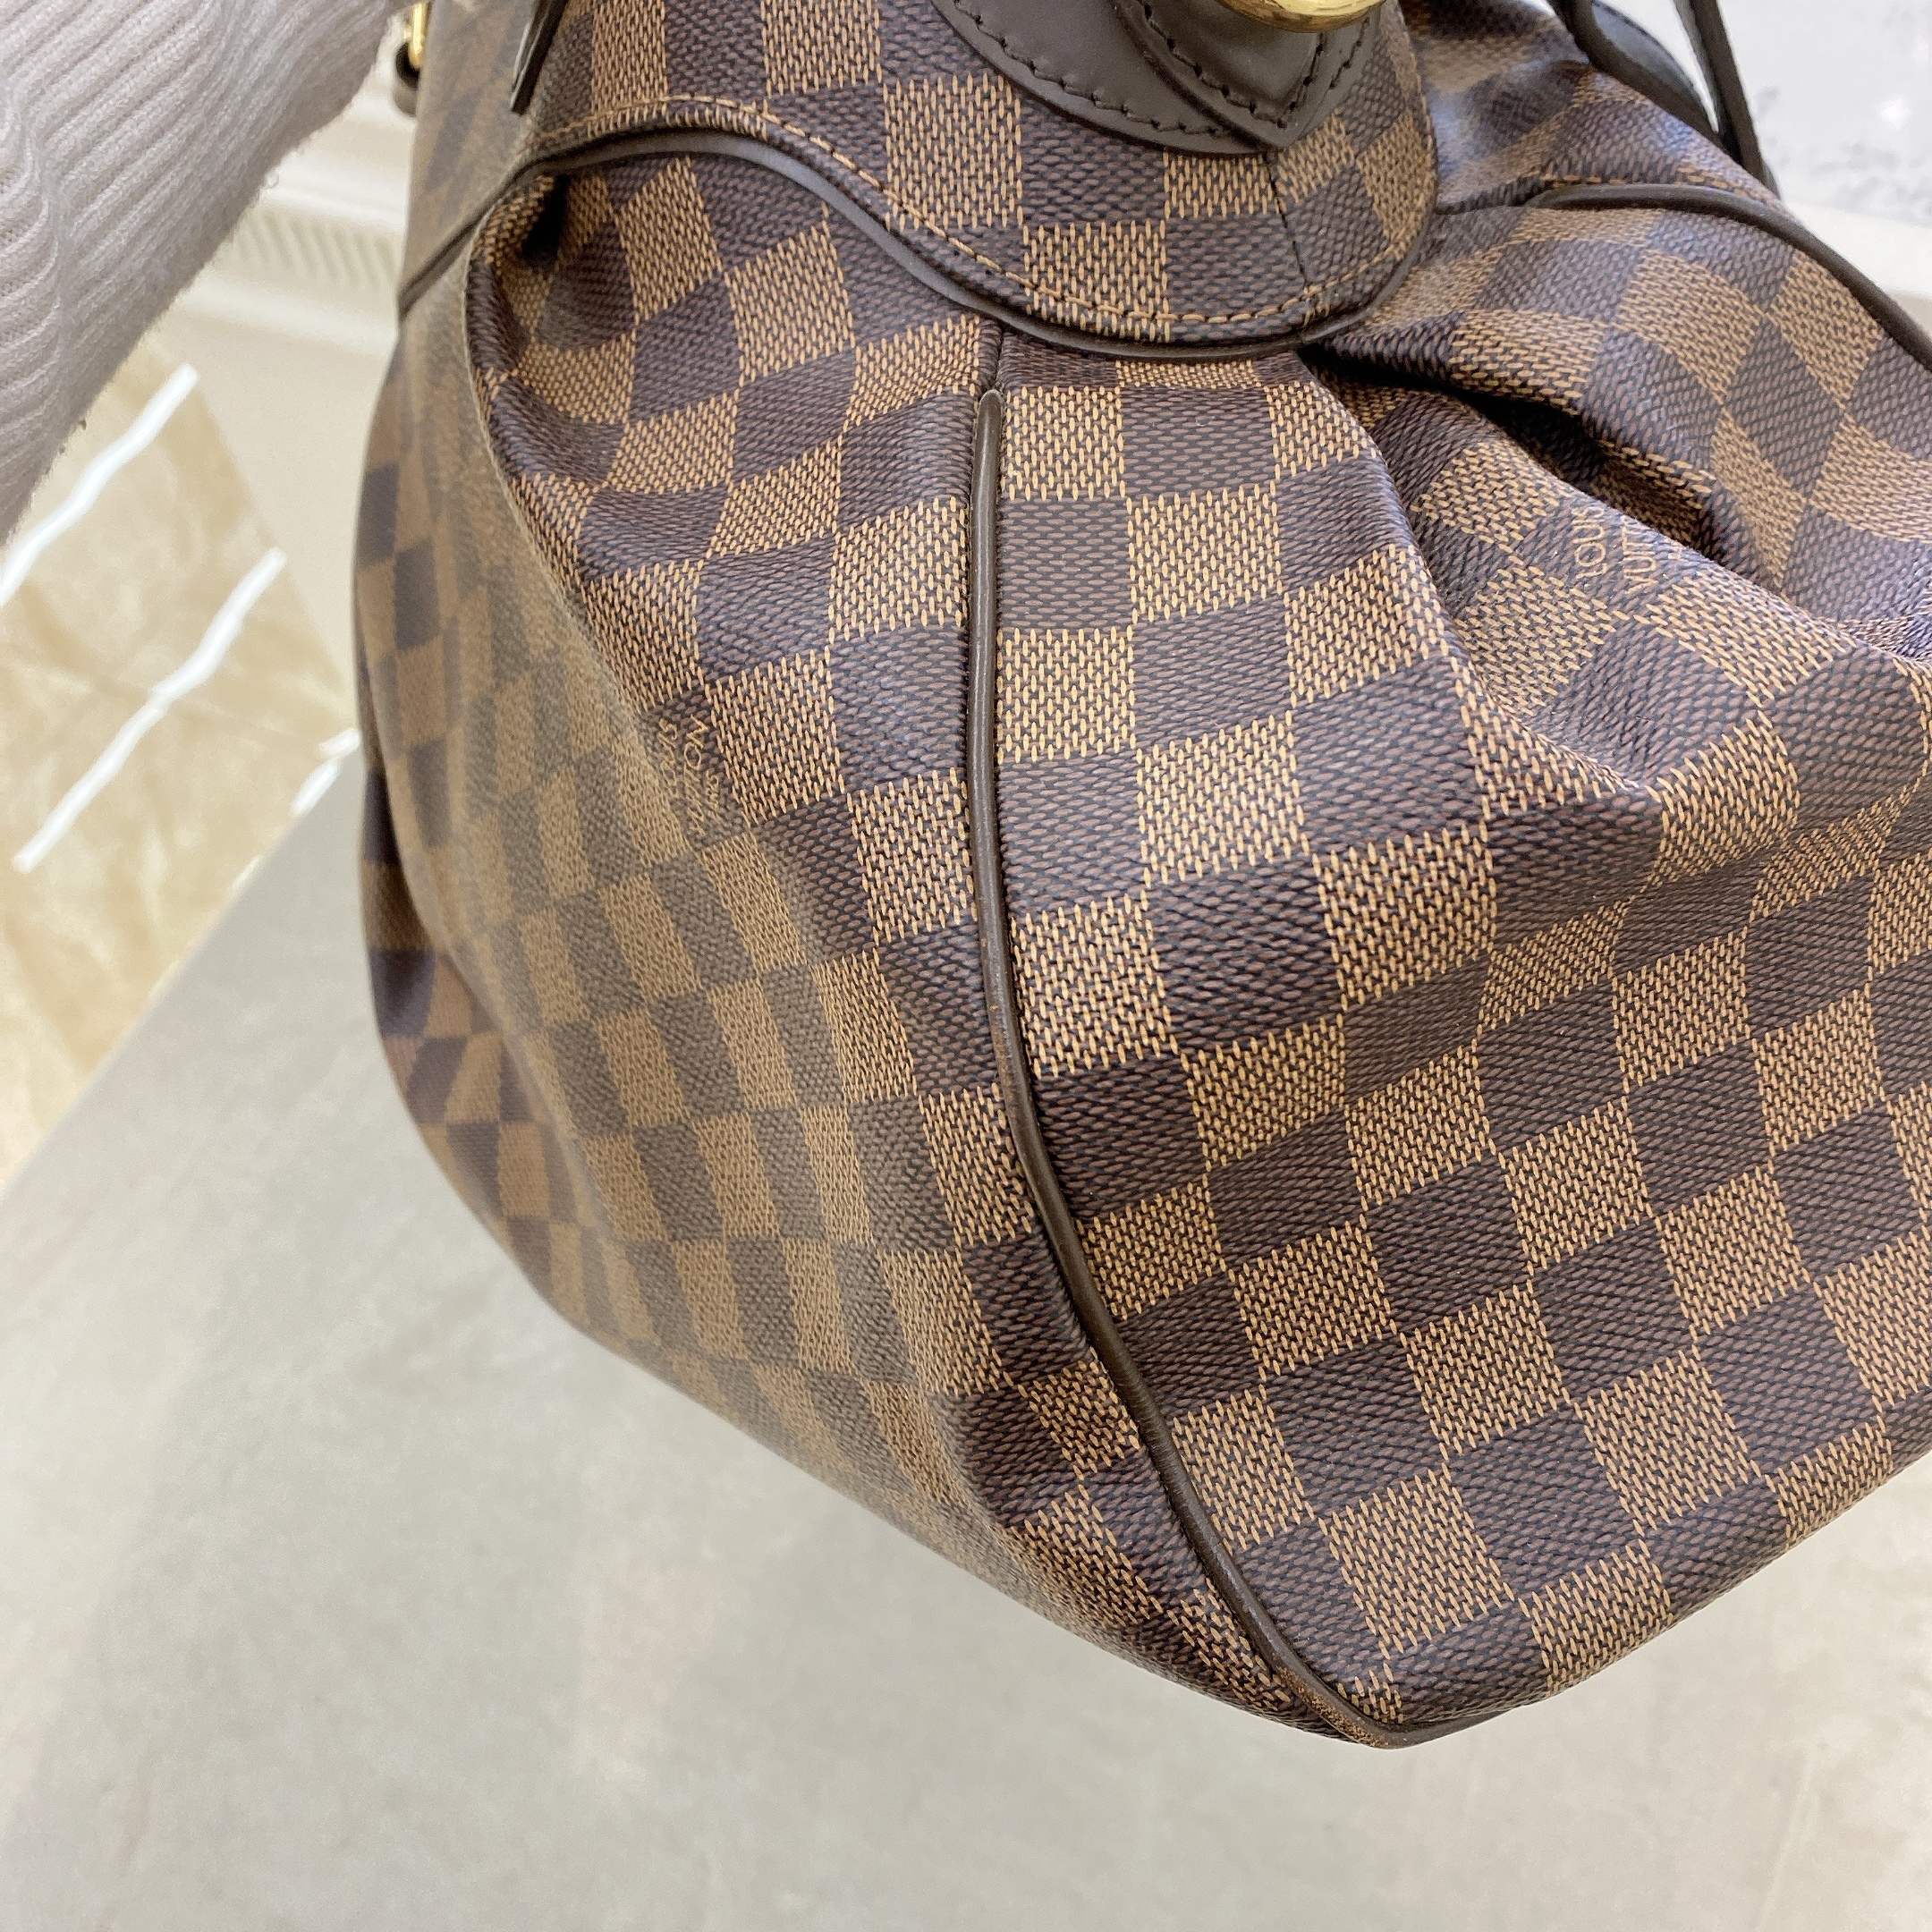 Pre-Owned Louis Vuitton Sistina PM Damier Ebene Shoulder Bag - Pristine  Condition 